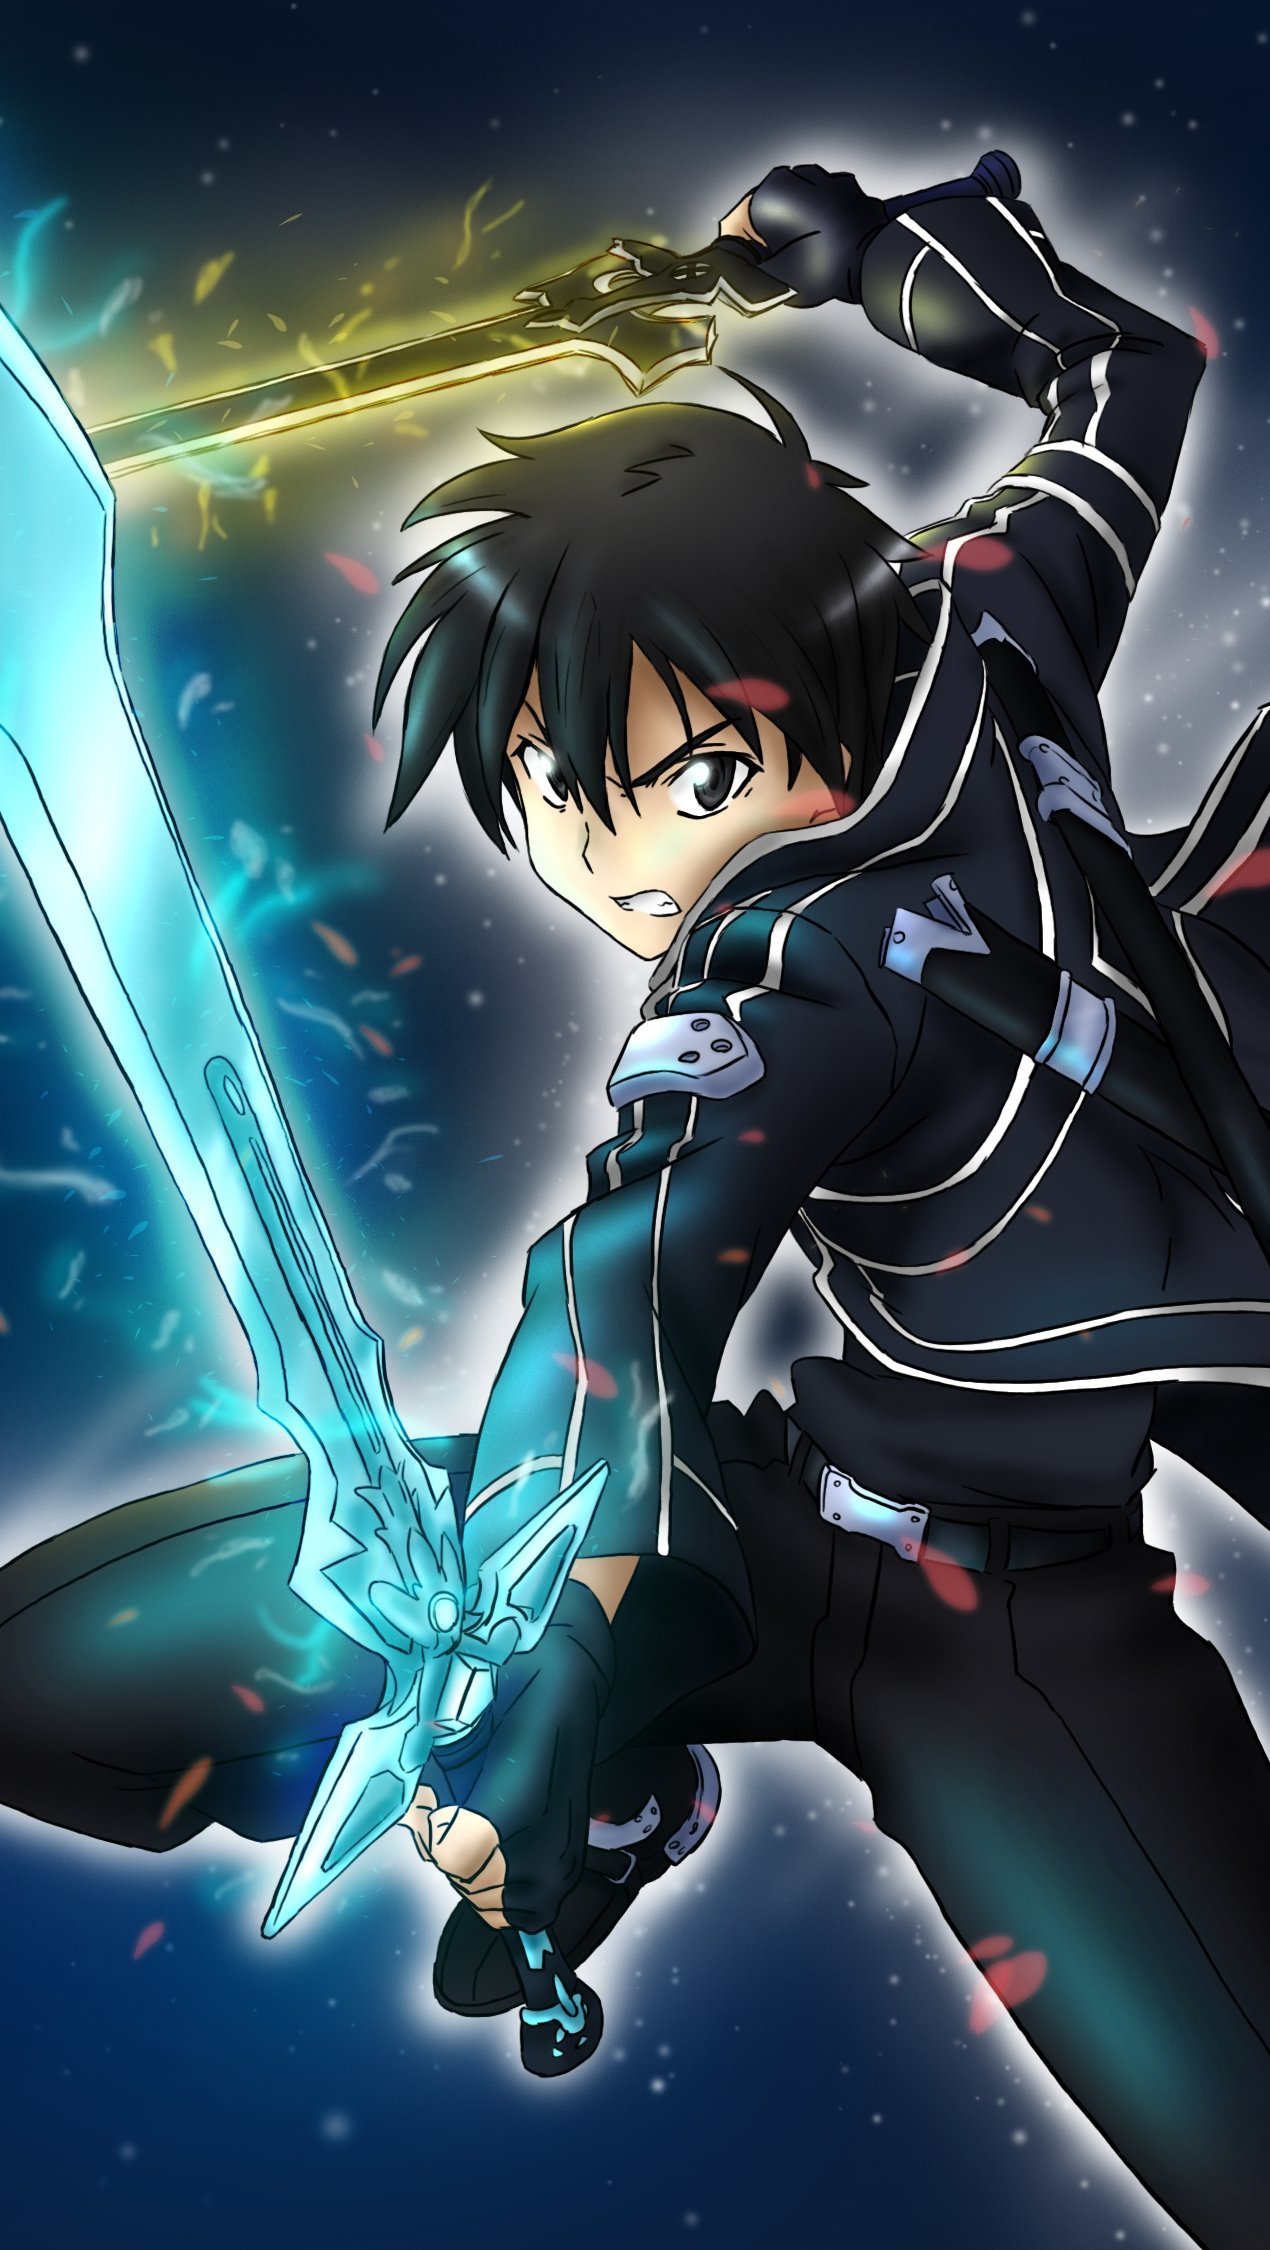 Kirito Sword Art Online Anime Wallpaper ID3075